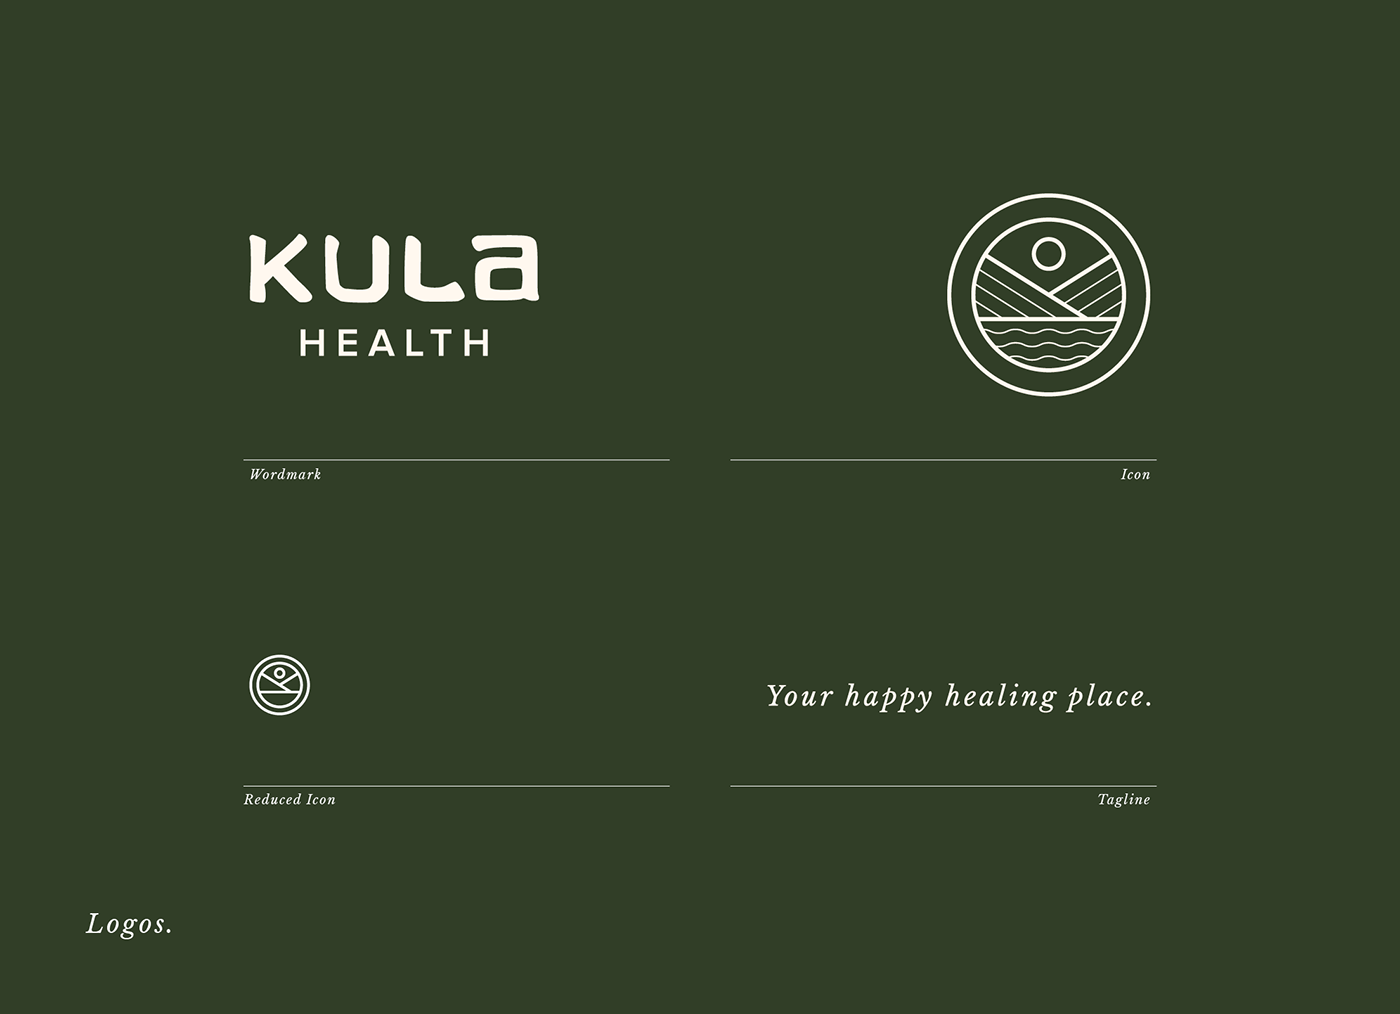 Nature Health Brisbane Yoga meditation Wellness logo green design Business Cards